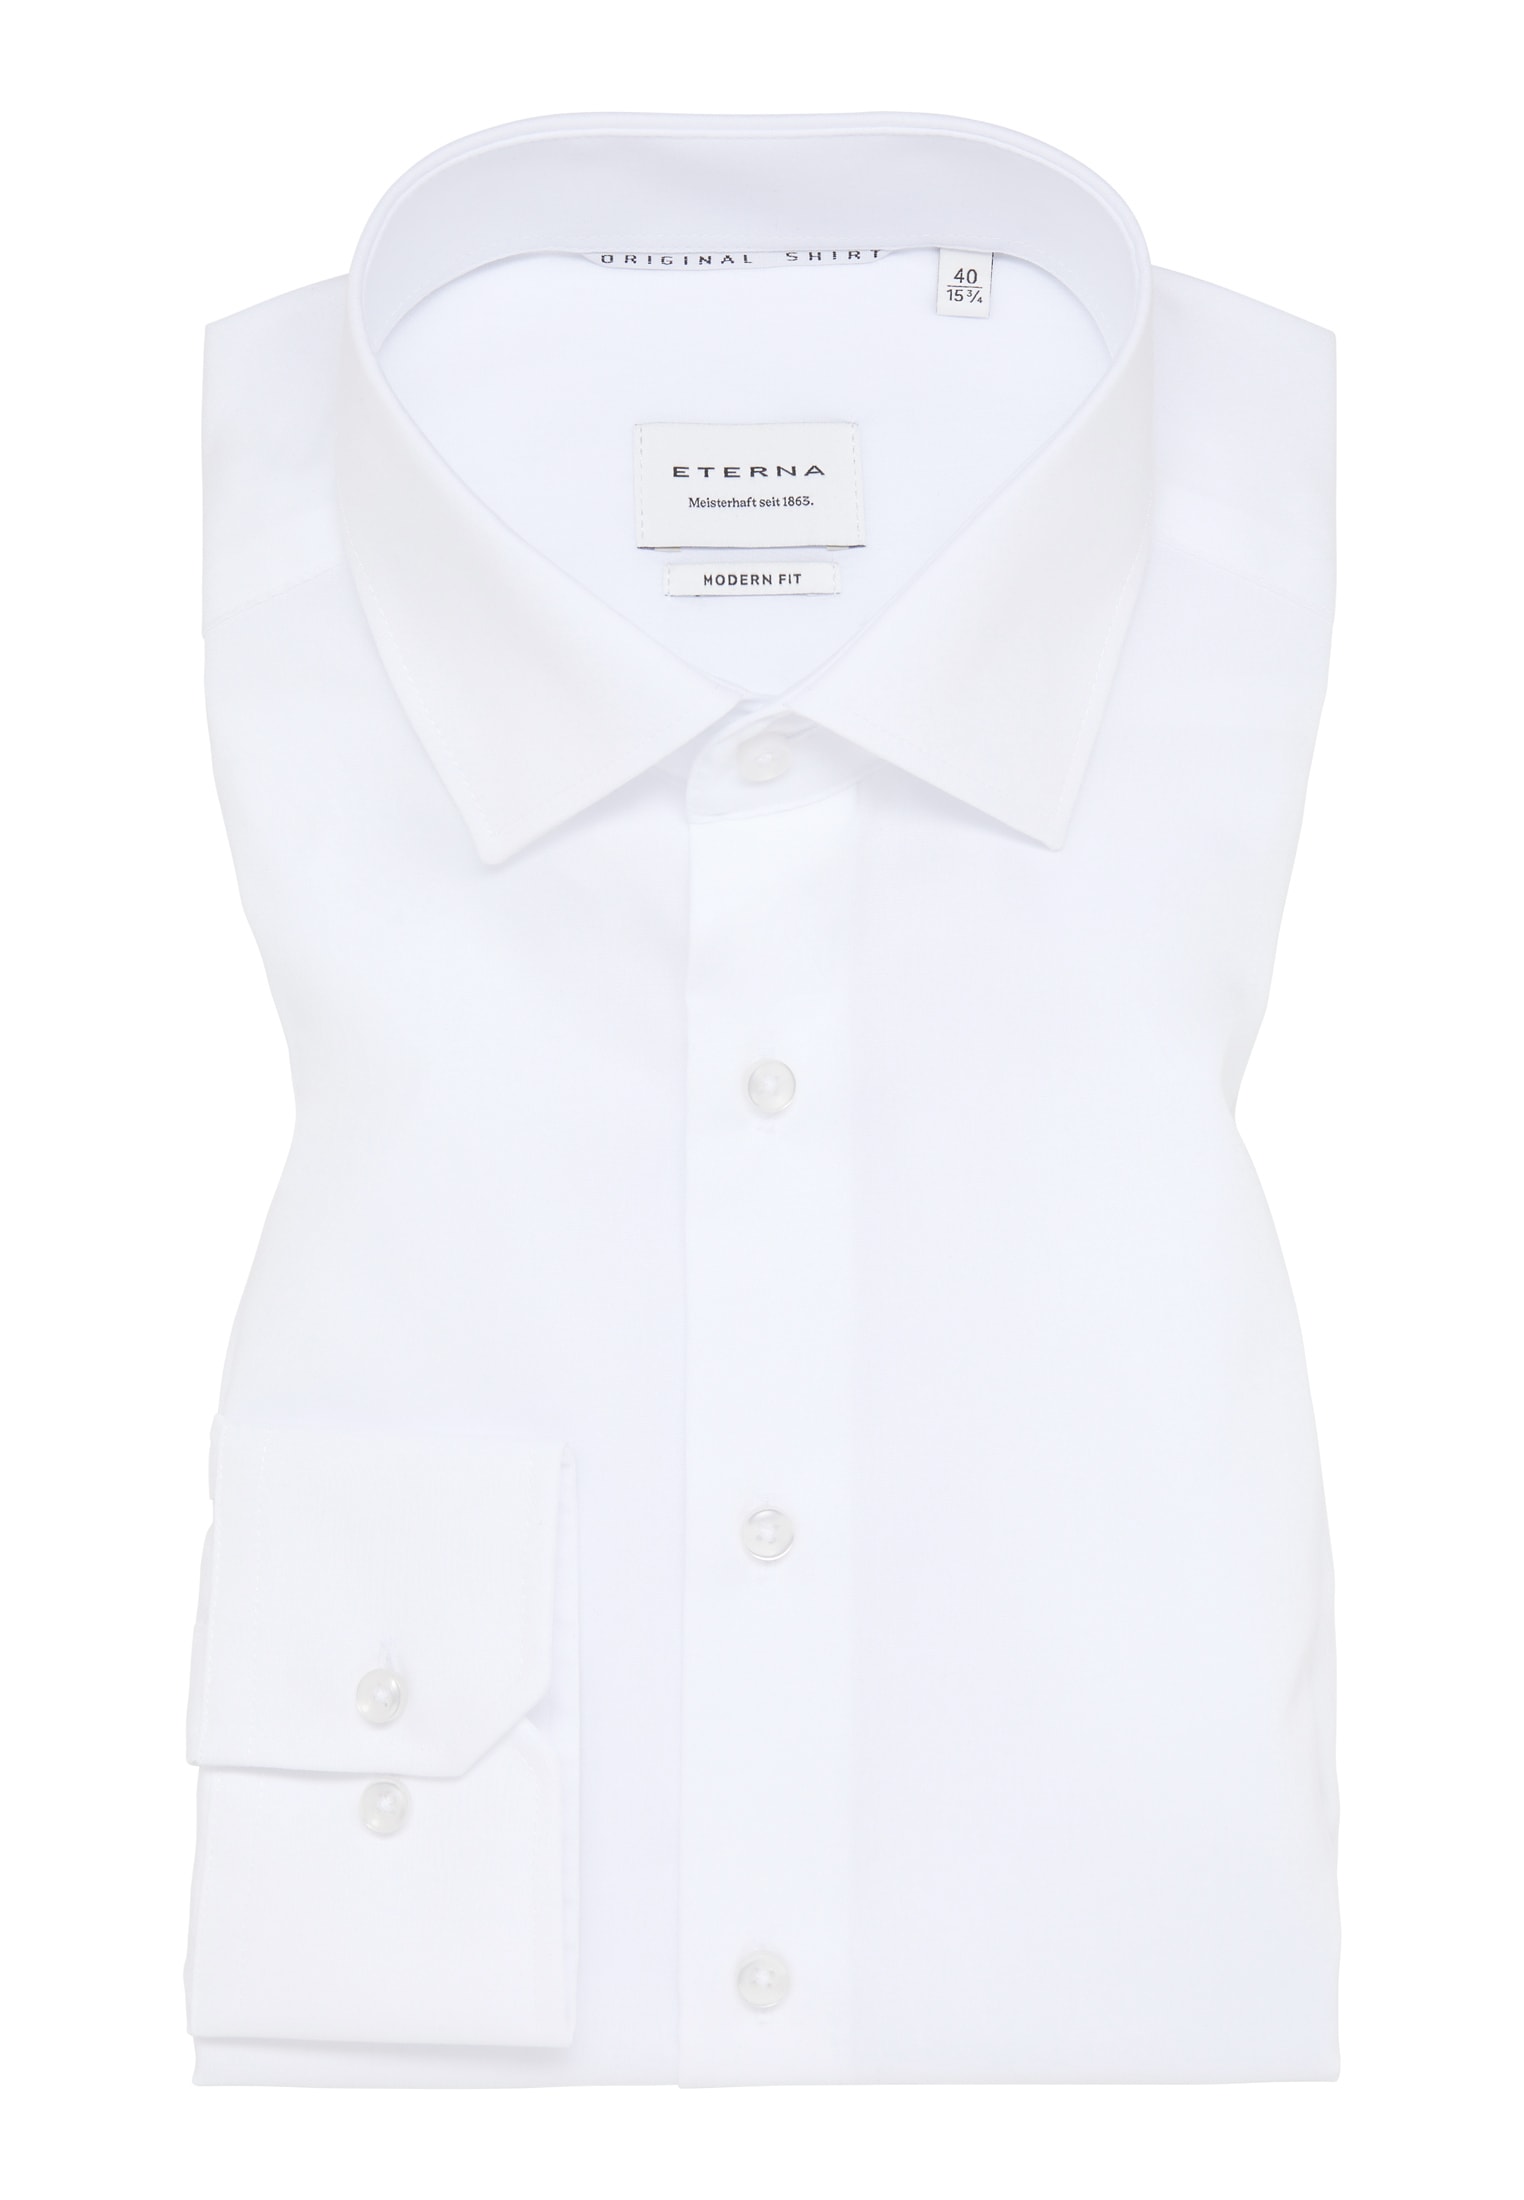 MODERN FIT Original 38 Shirt 1SH12596-00-01-38-1/1 Langarm weiß | unifarben in weiß | | 